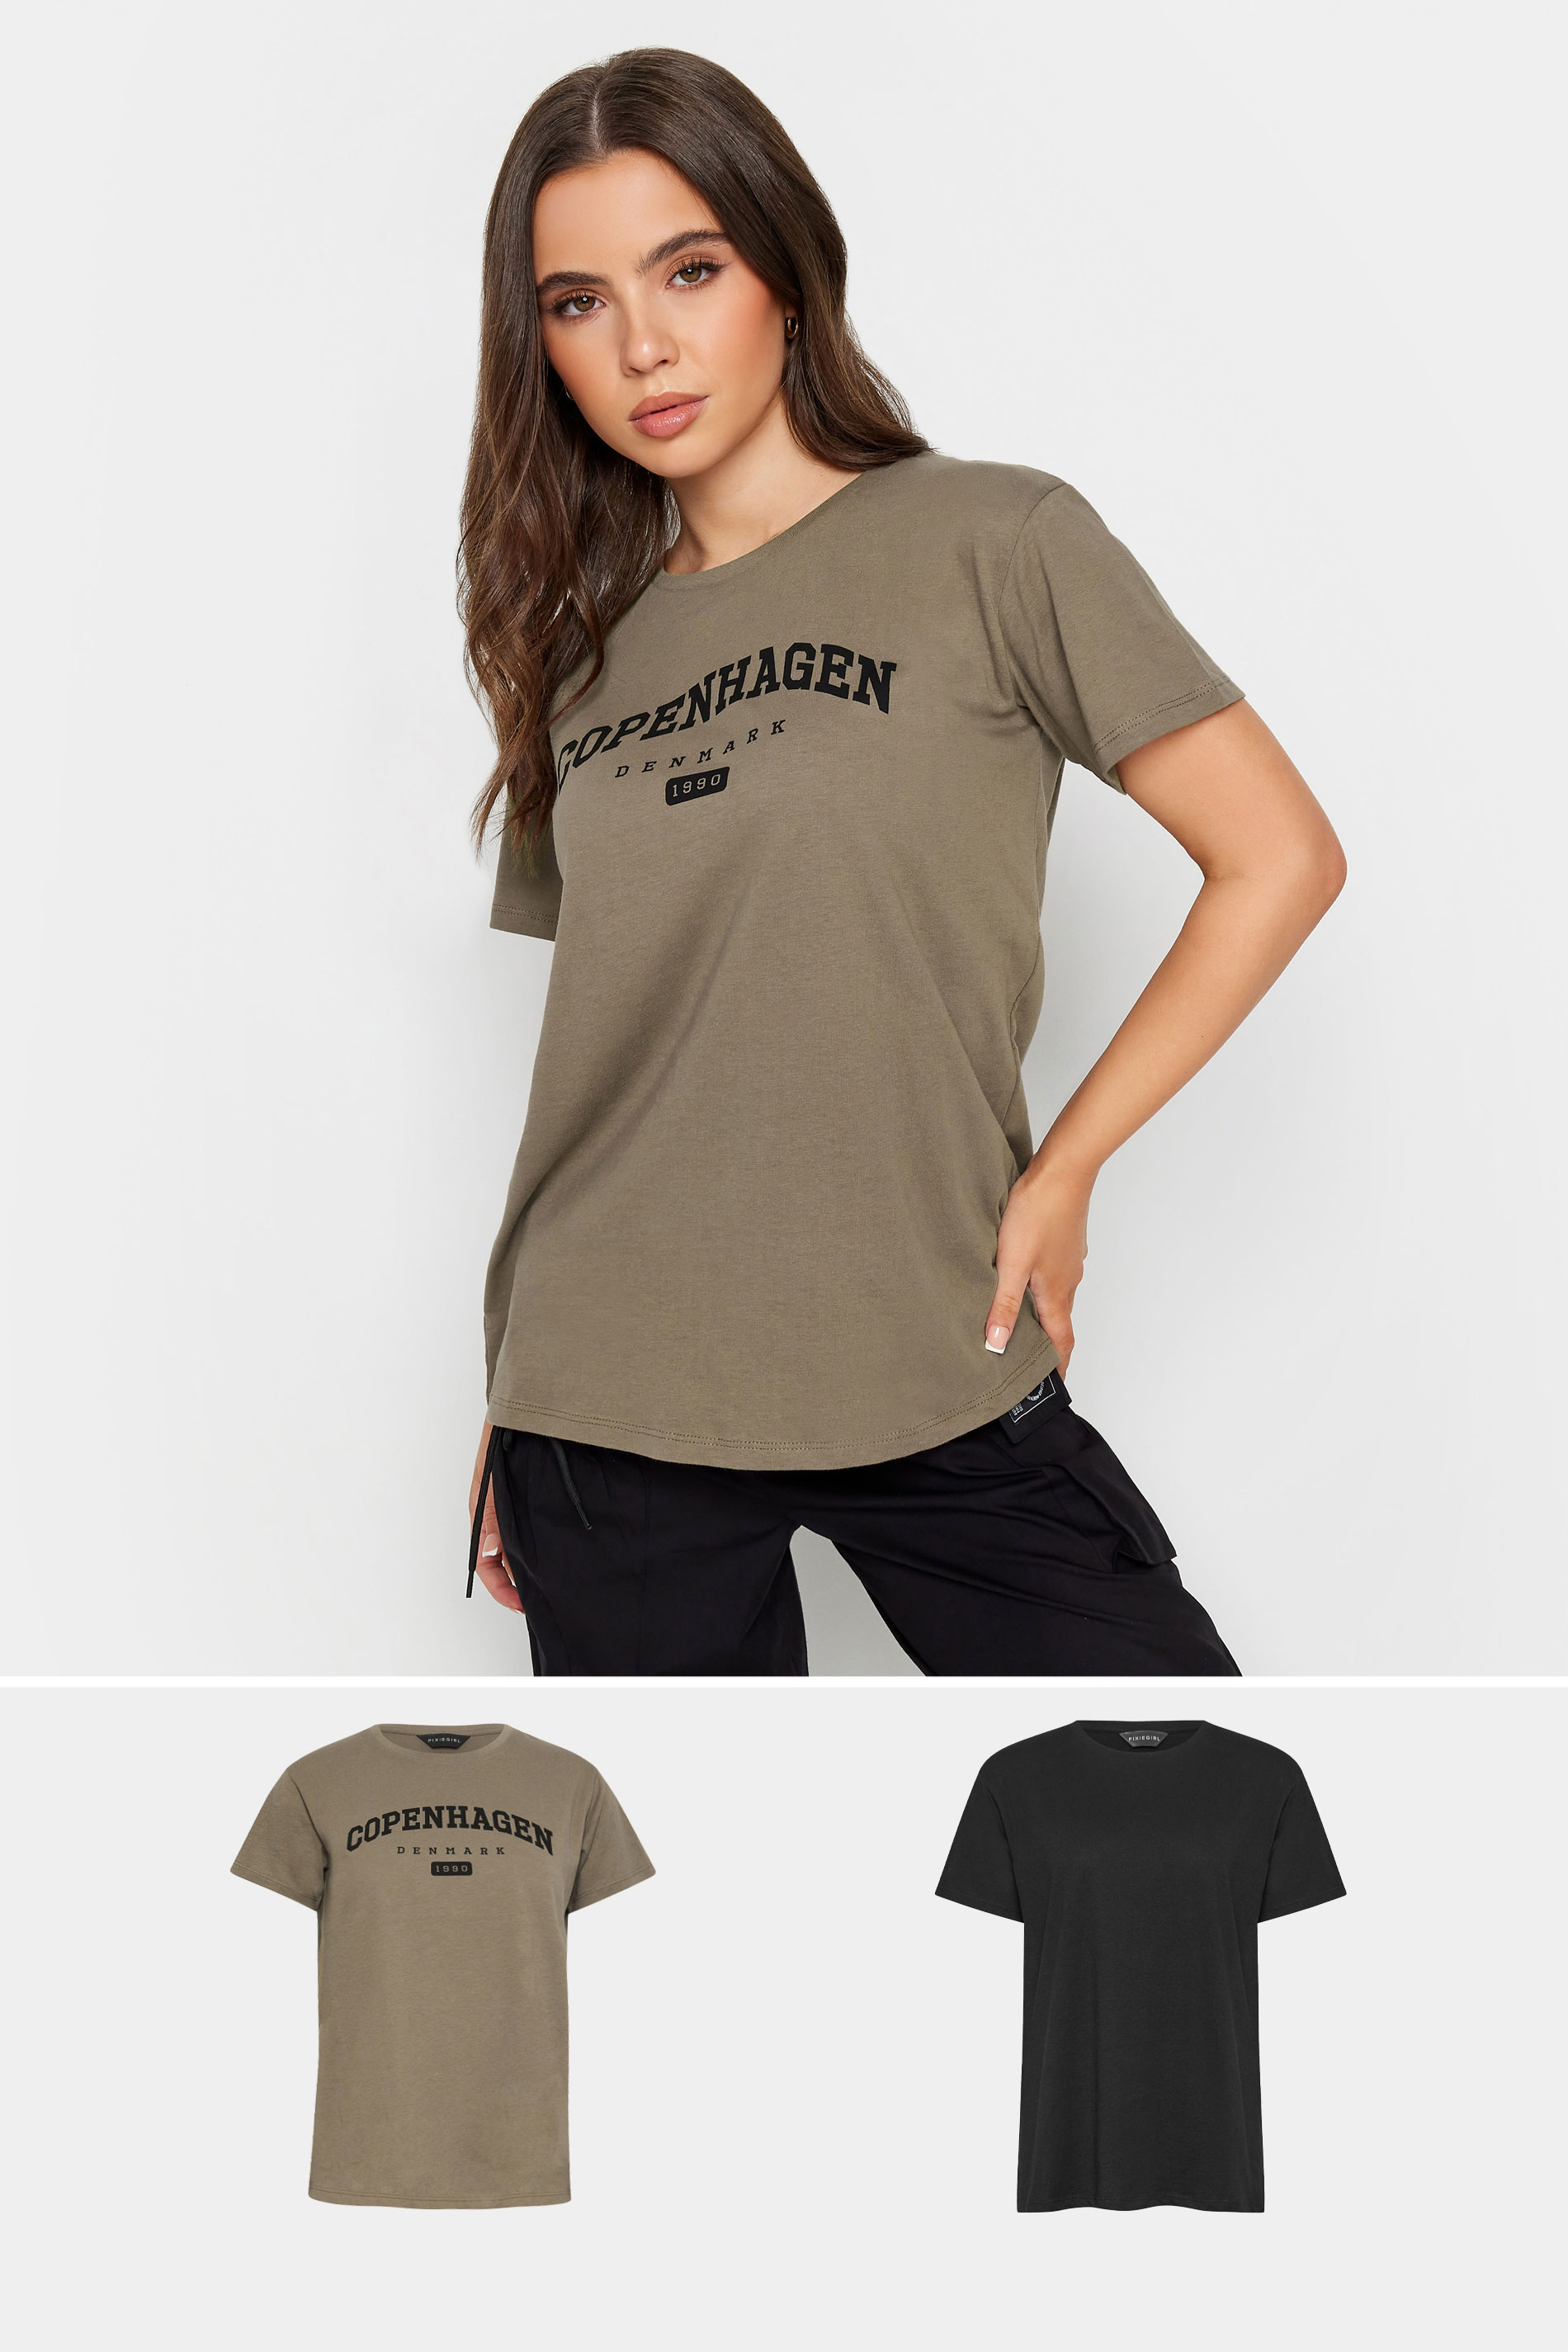 PixieGirl 2 PACK Black & Brown 'Copenhagen' Slogan T-Shirts | PixieGirl  1